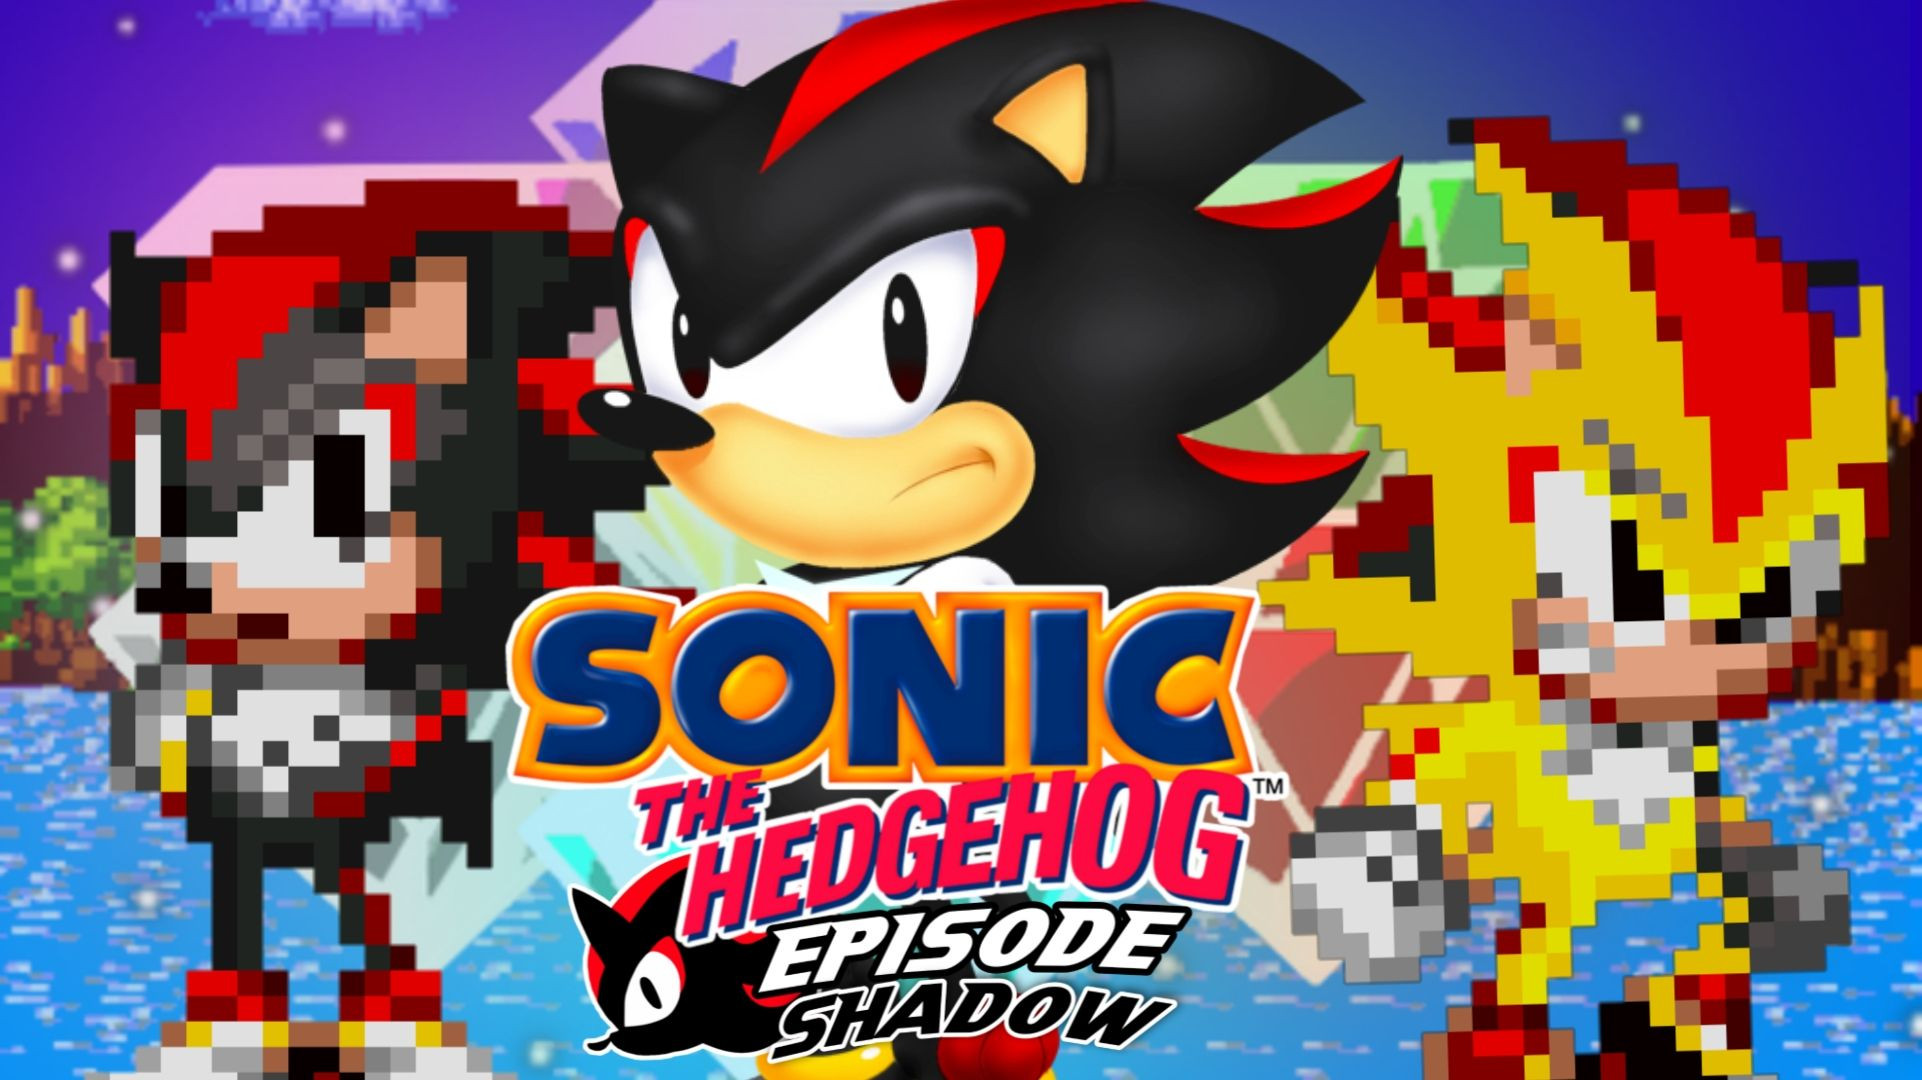 Sonic Music  Sonic, Sonic the hedgehog, Sonic and shadow